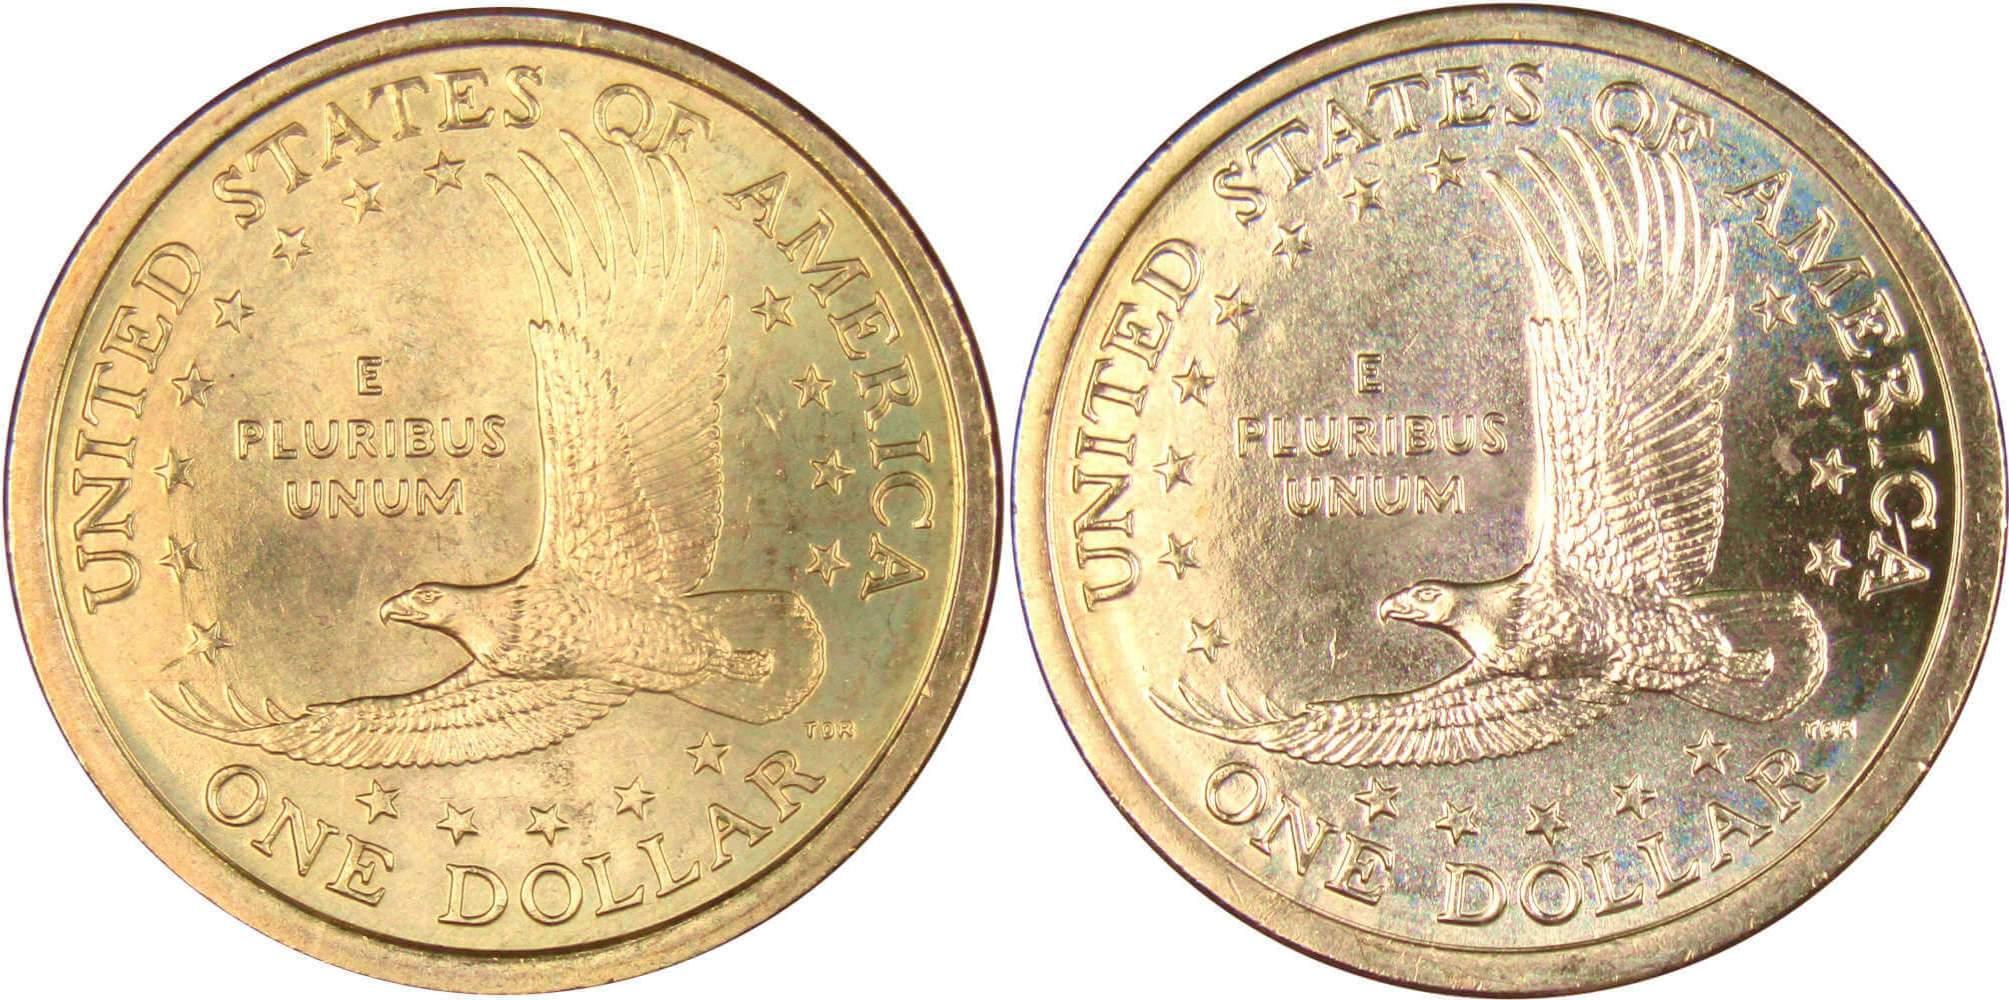 2008 P&D Sacagawea Native American Dollar 2 Coin Set BU Uncirculated $1